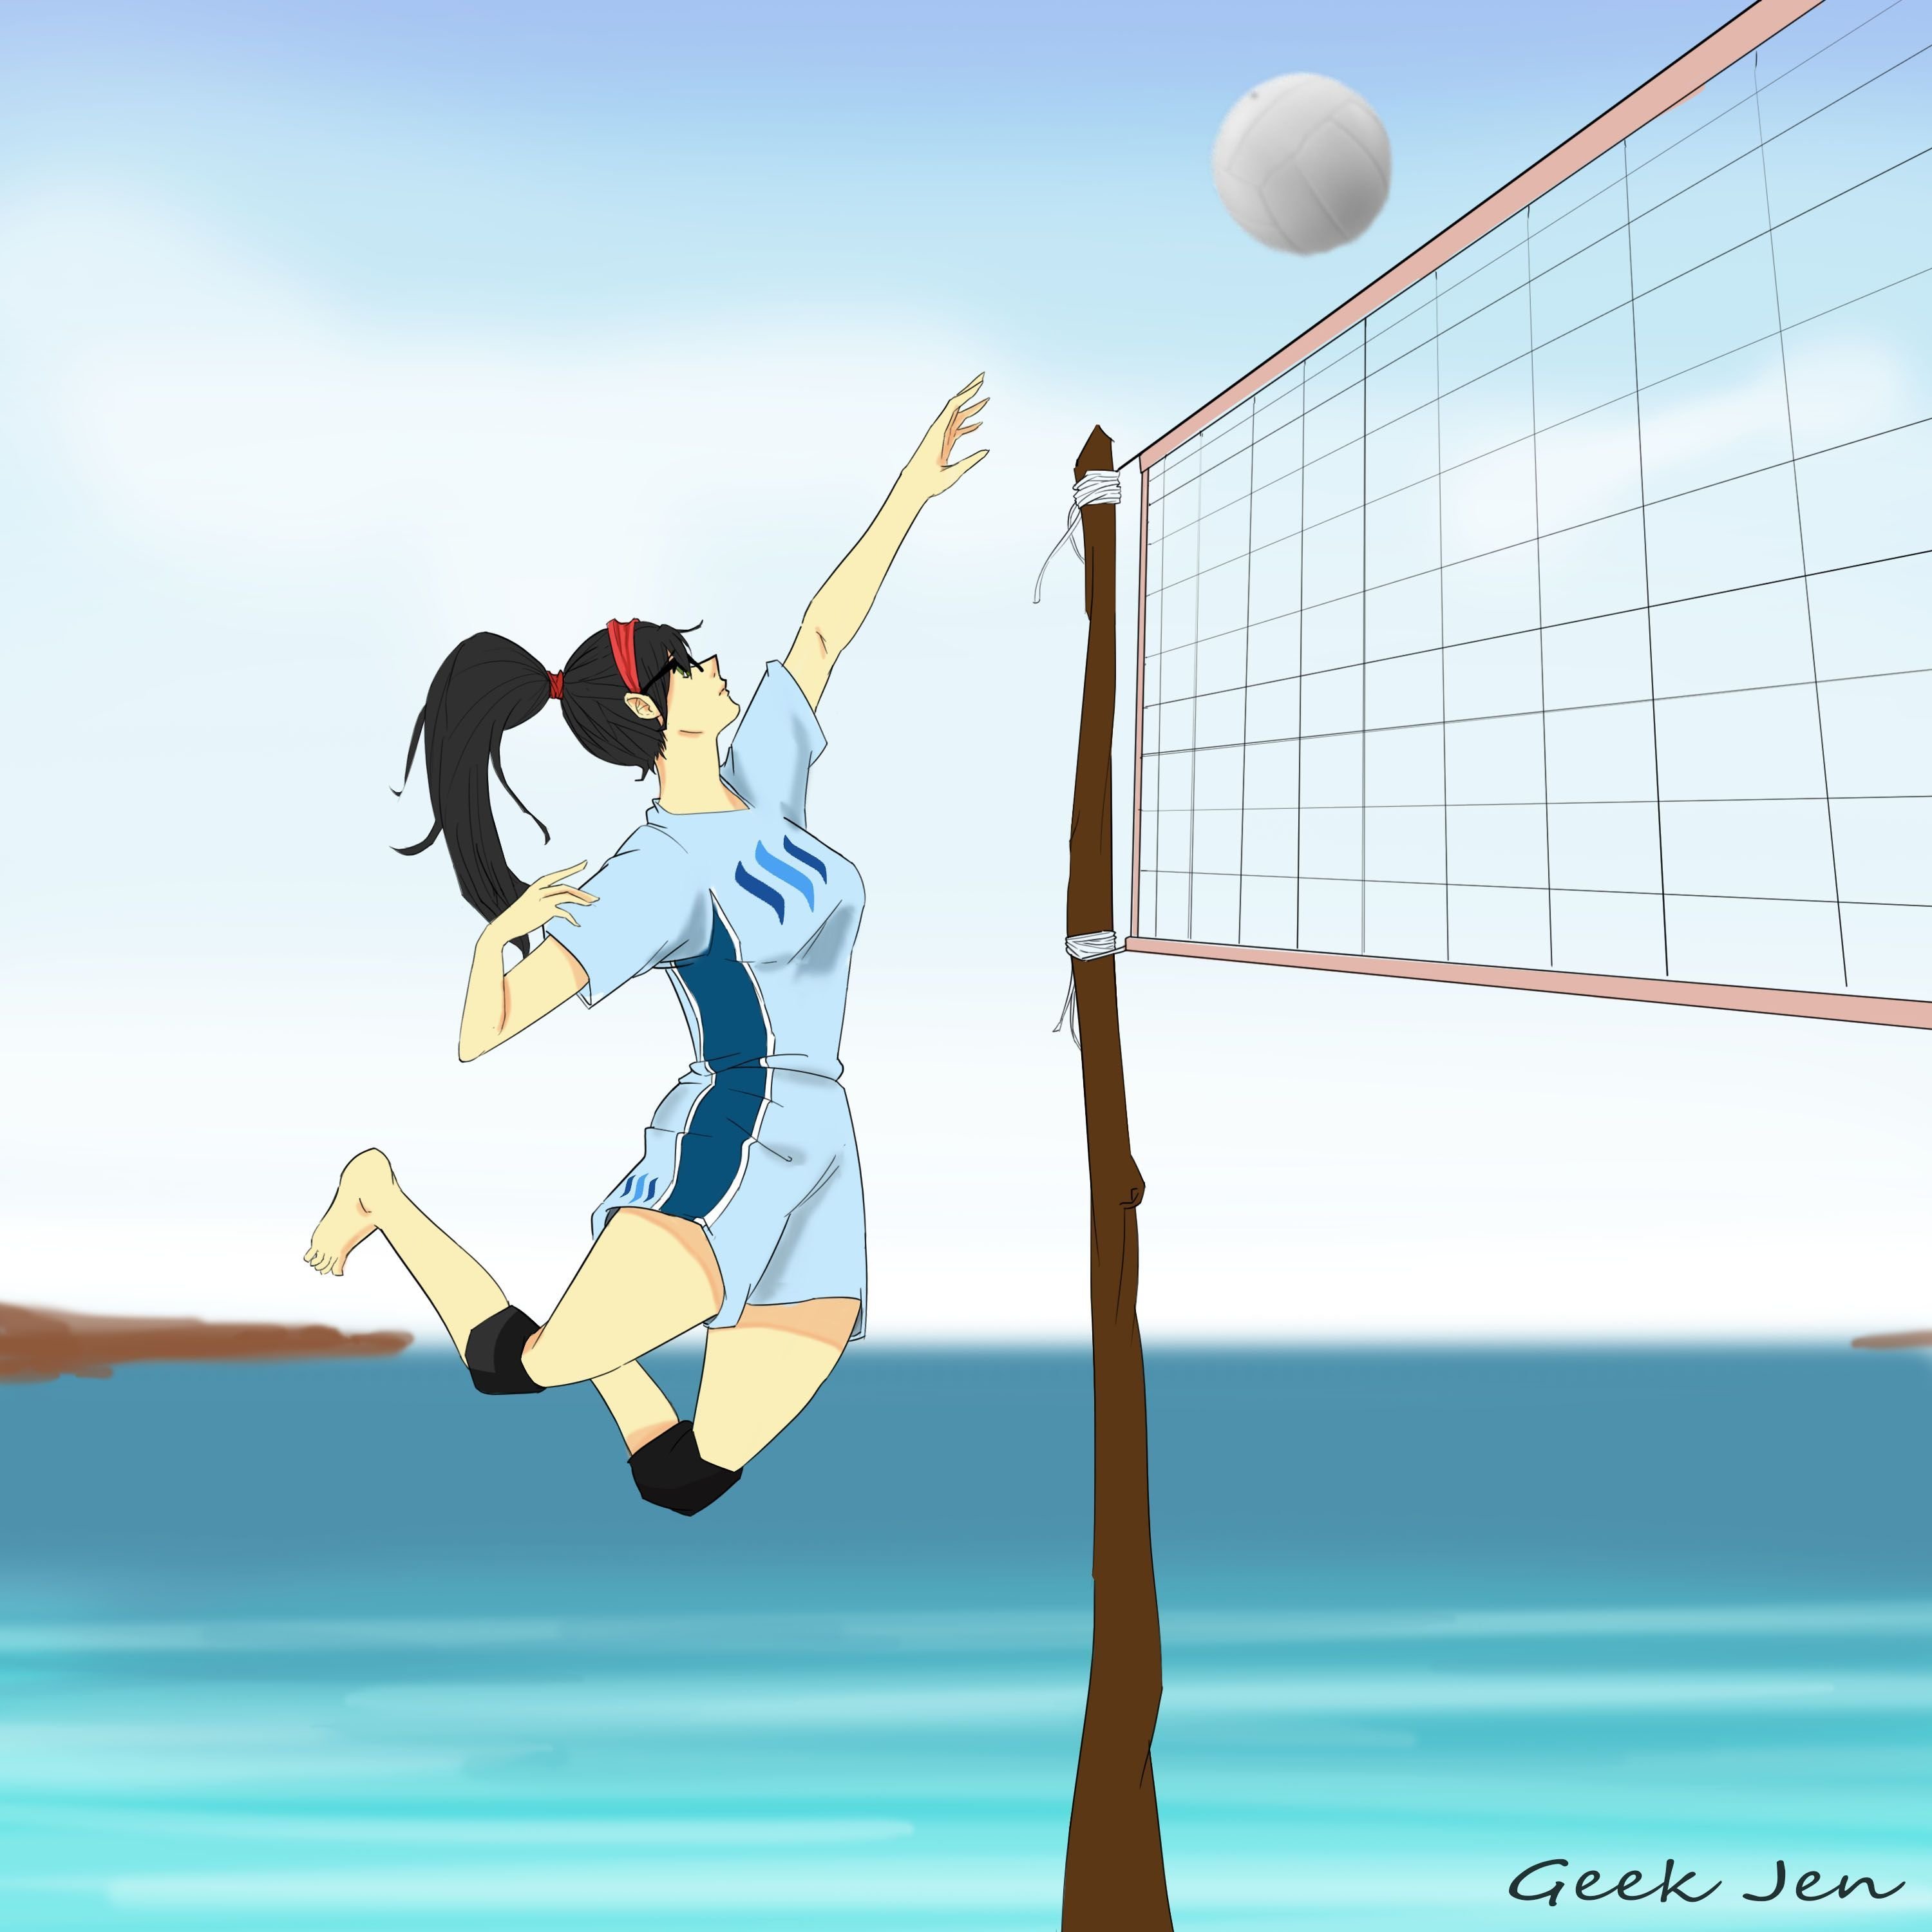 Рисунок волейболиста